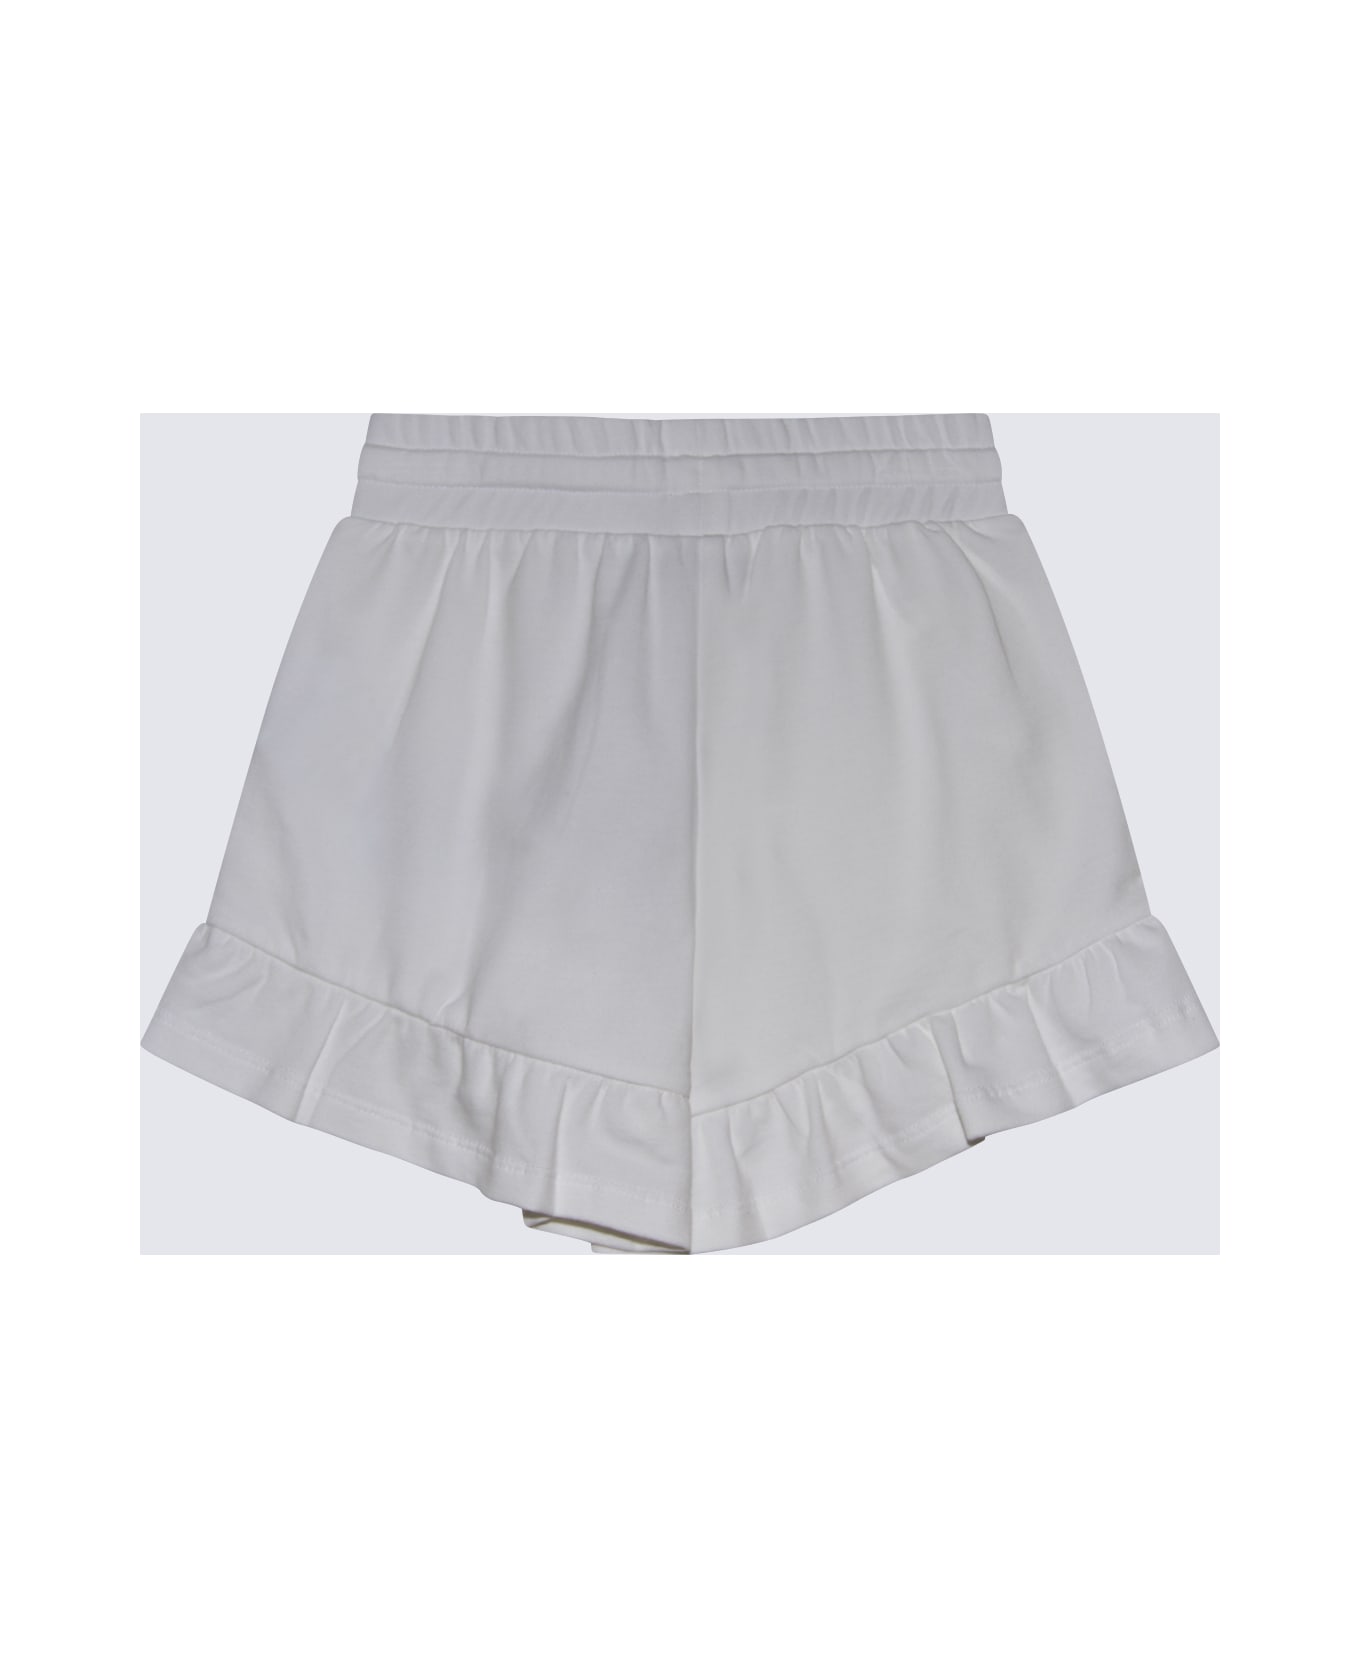 Moschino White Multicolour Cotton Blend Shorts - White